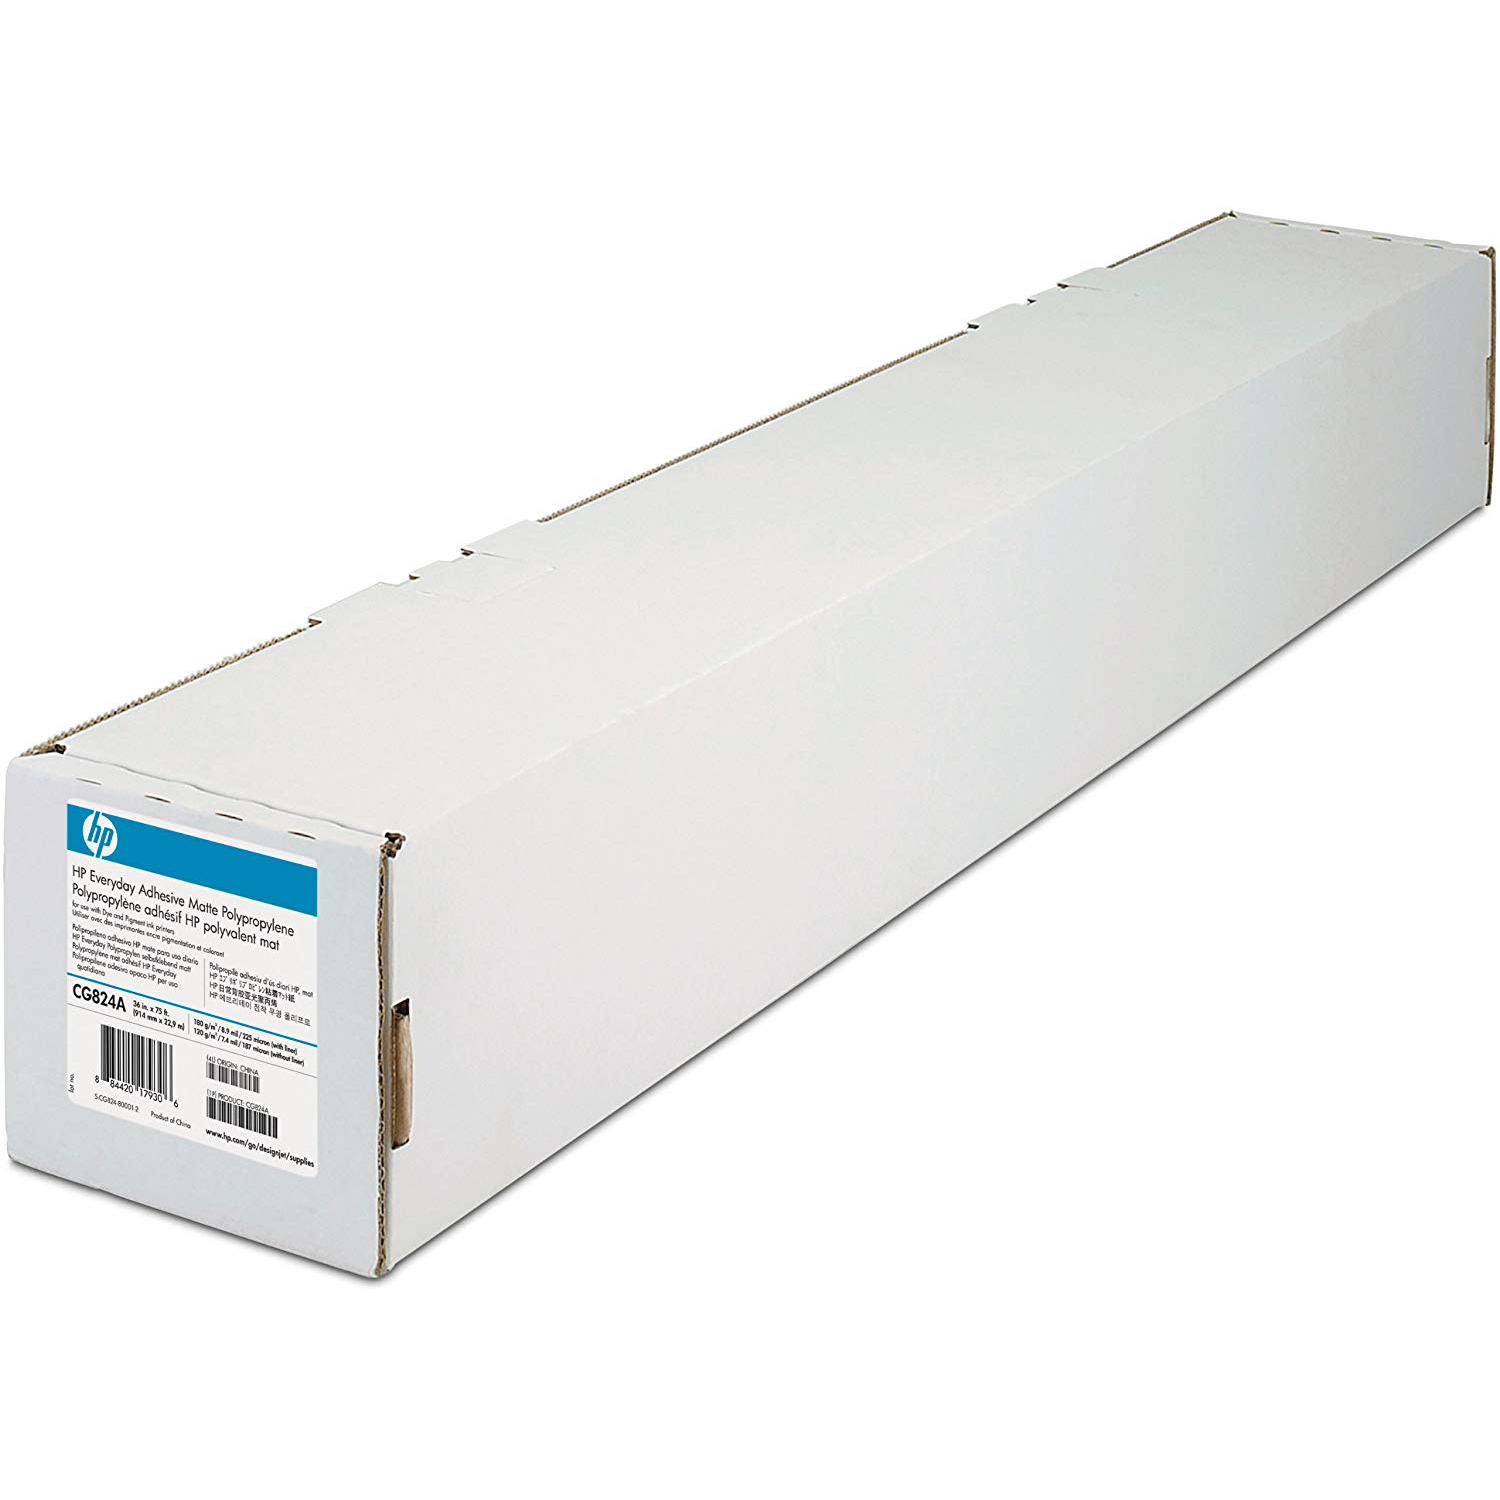 Original HP 80gsm 24in x 50ft Professional Matte Canvas Paper Roll (Q8673B)